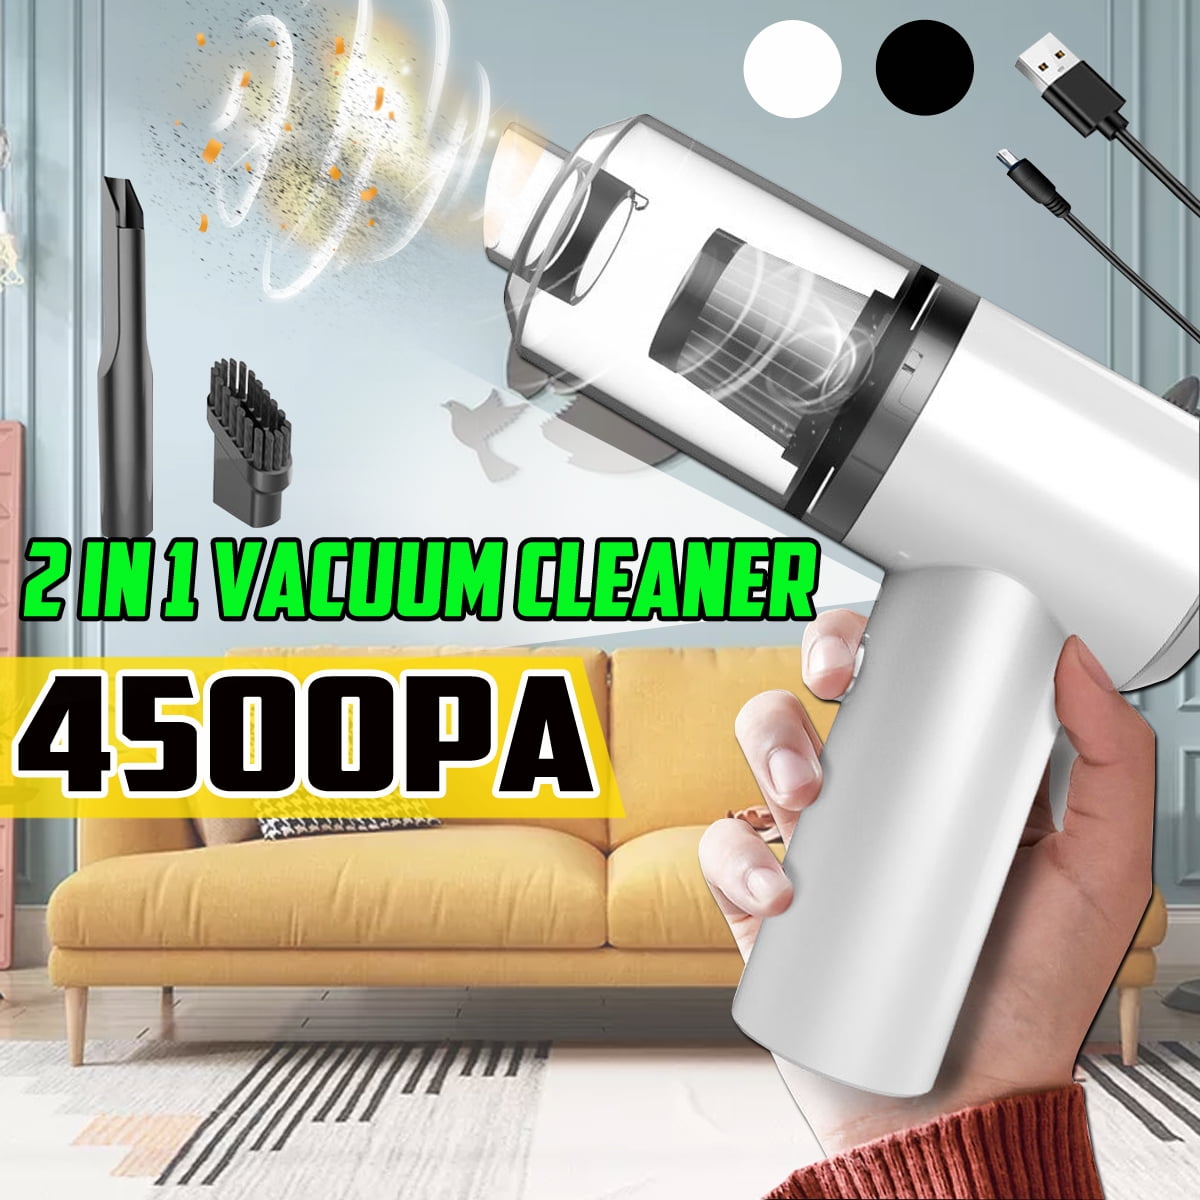 2-In-1 Cordless Car Vacuum Cleaner Home Wet/Dry HEPA Handheld Duster 7000KPA-USA 